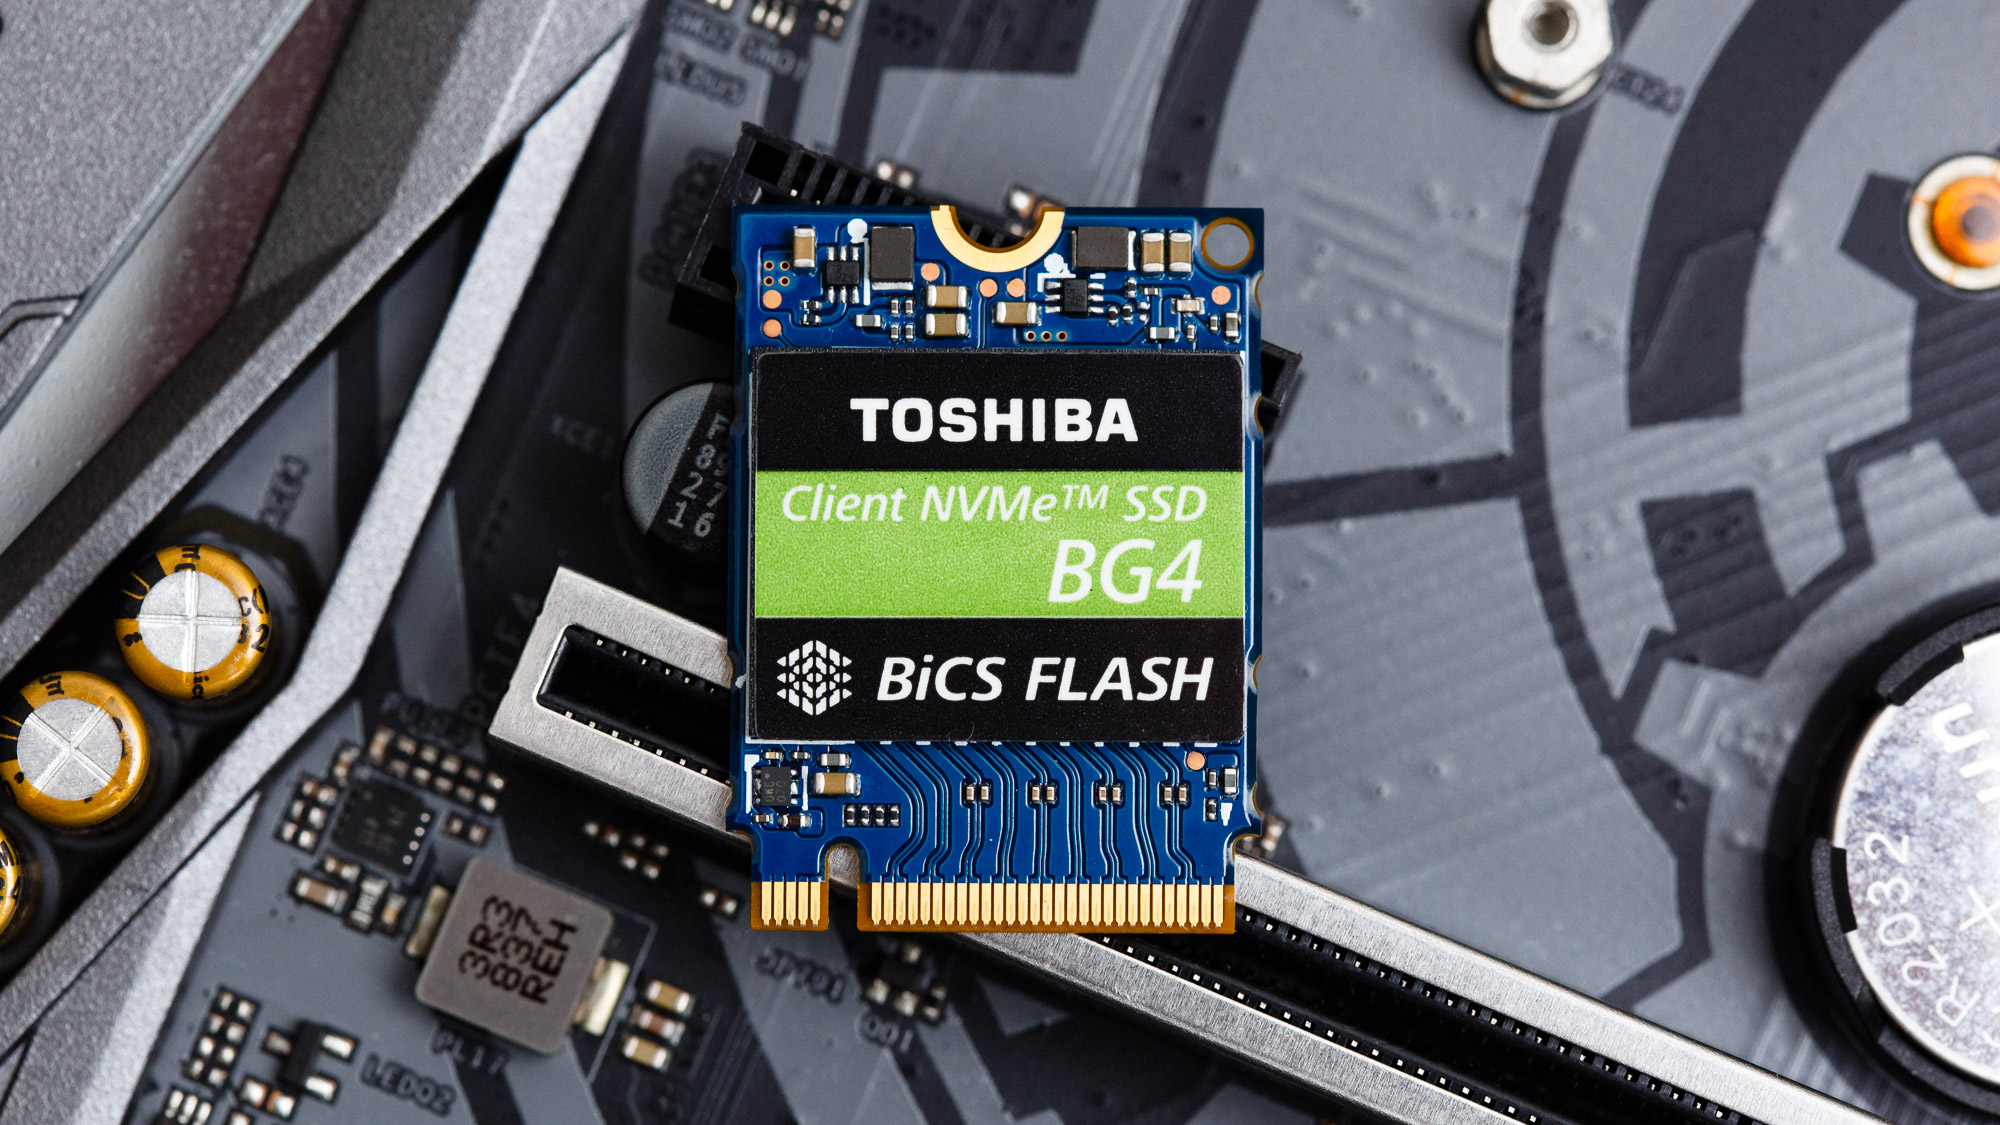 Toshiba Bg4 M 2 Nvme Ssd Review One Tiny But Speedy Ssd Tom S Hardware Tom S Hardware